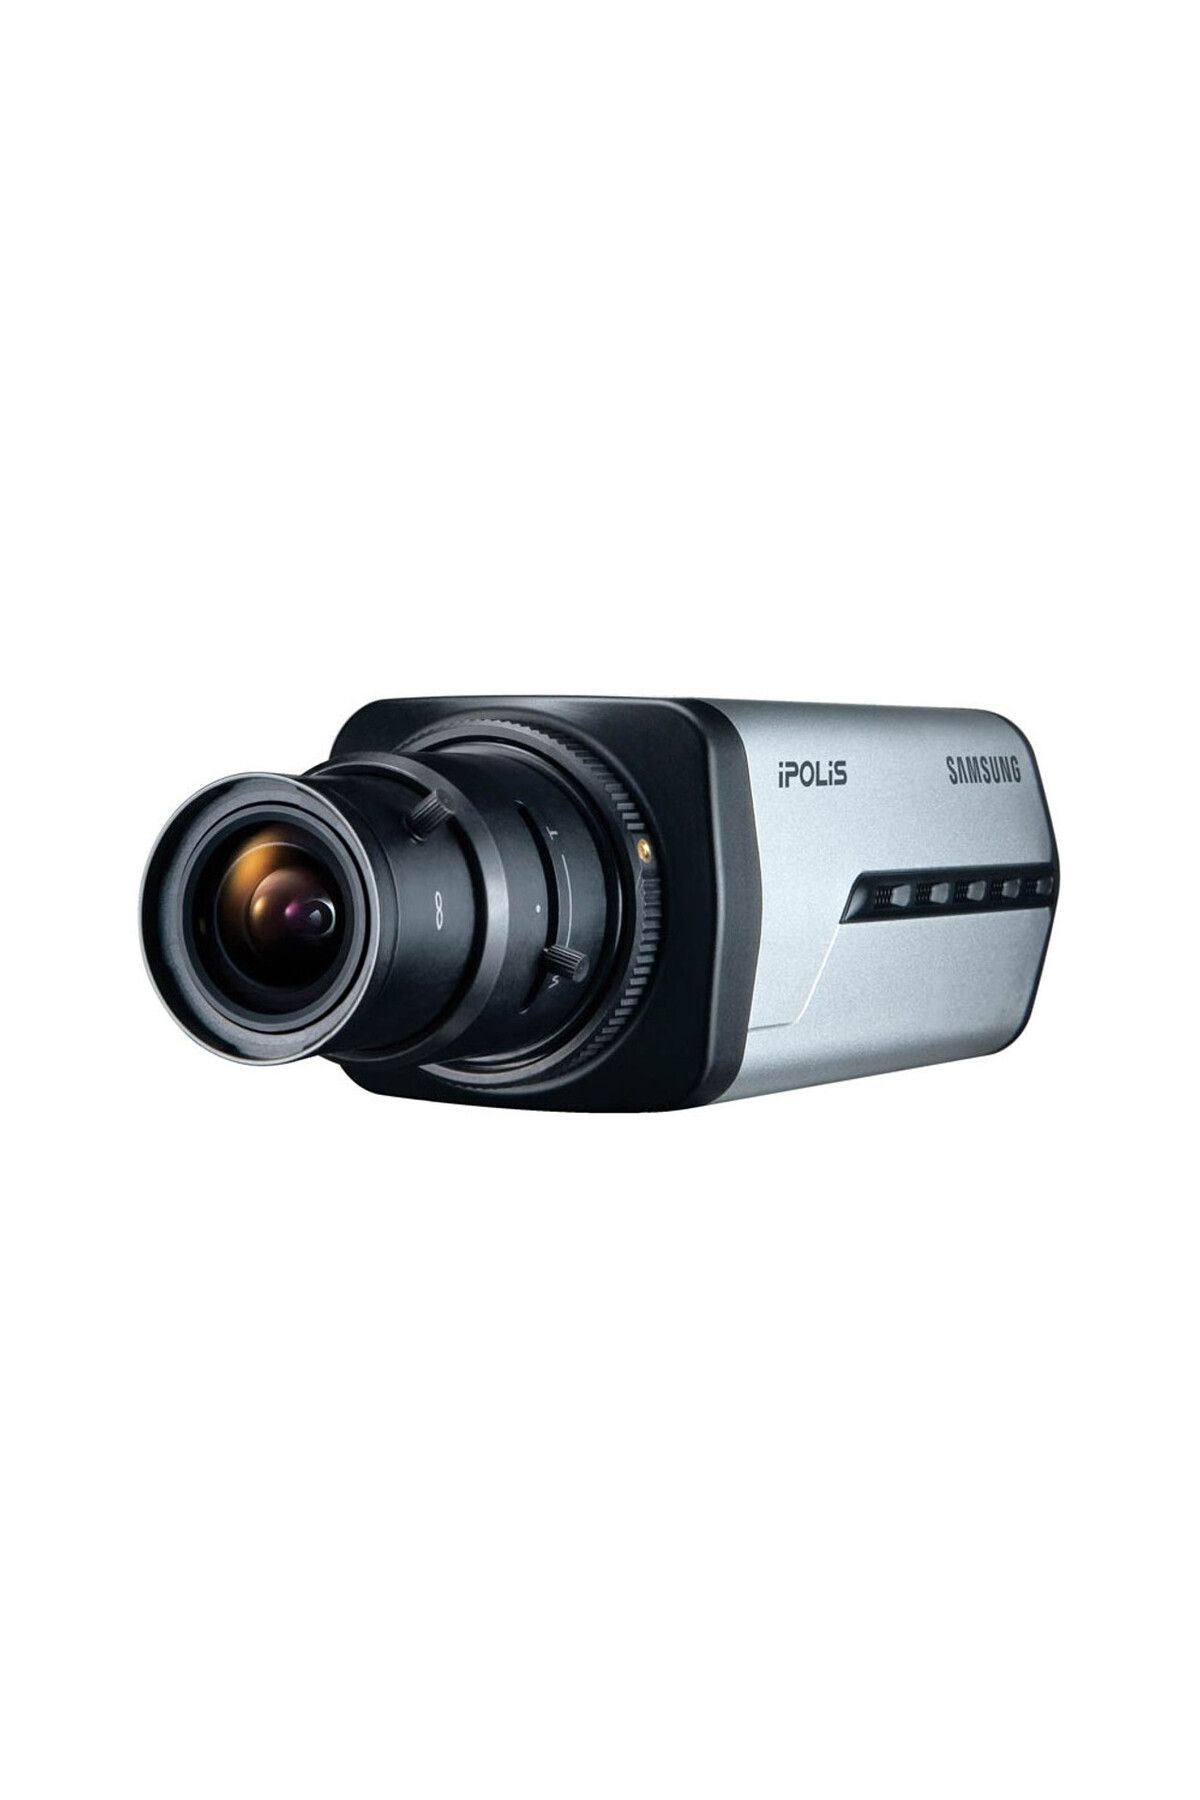 Samsung SNB-3002P Network Camera